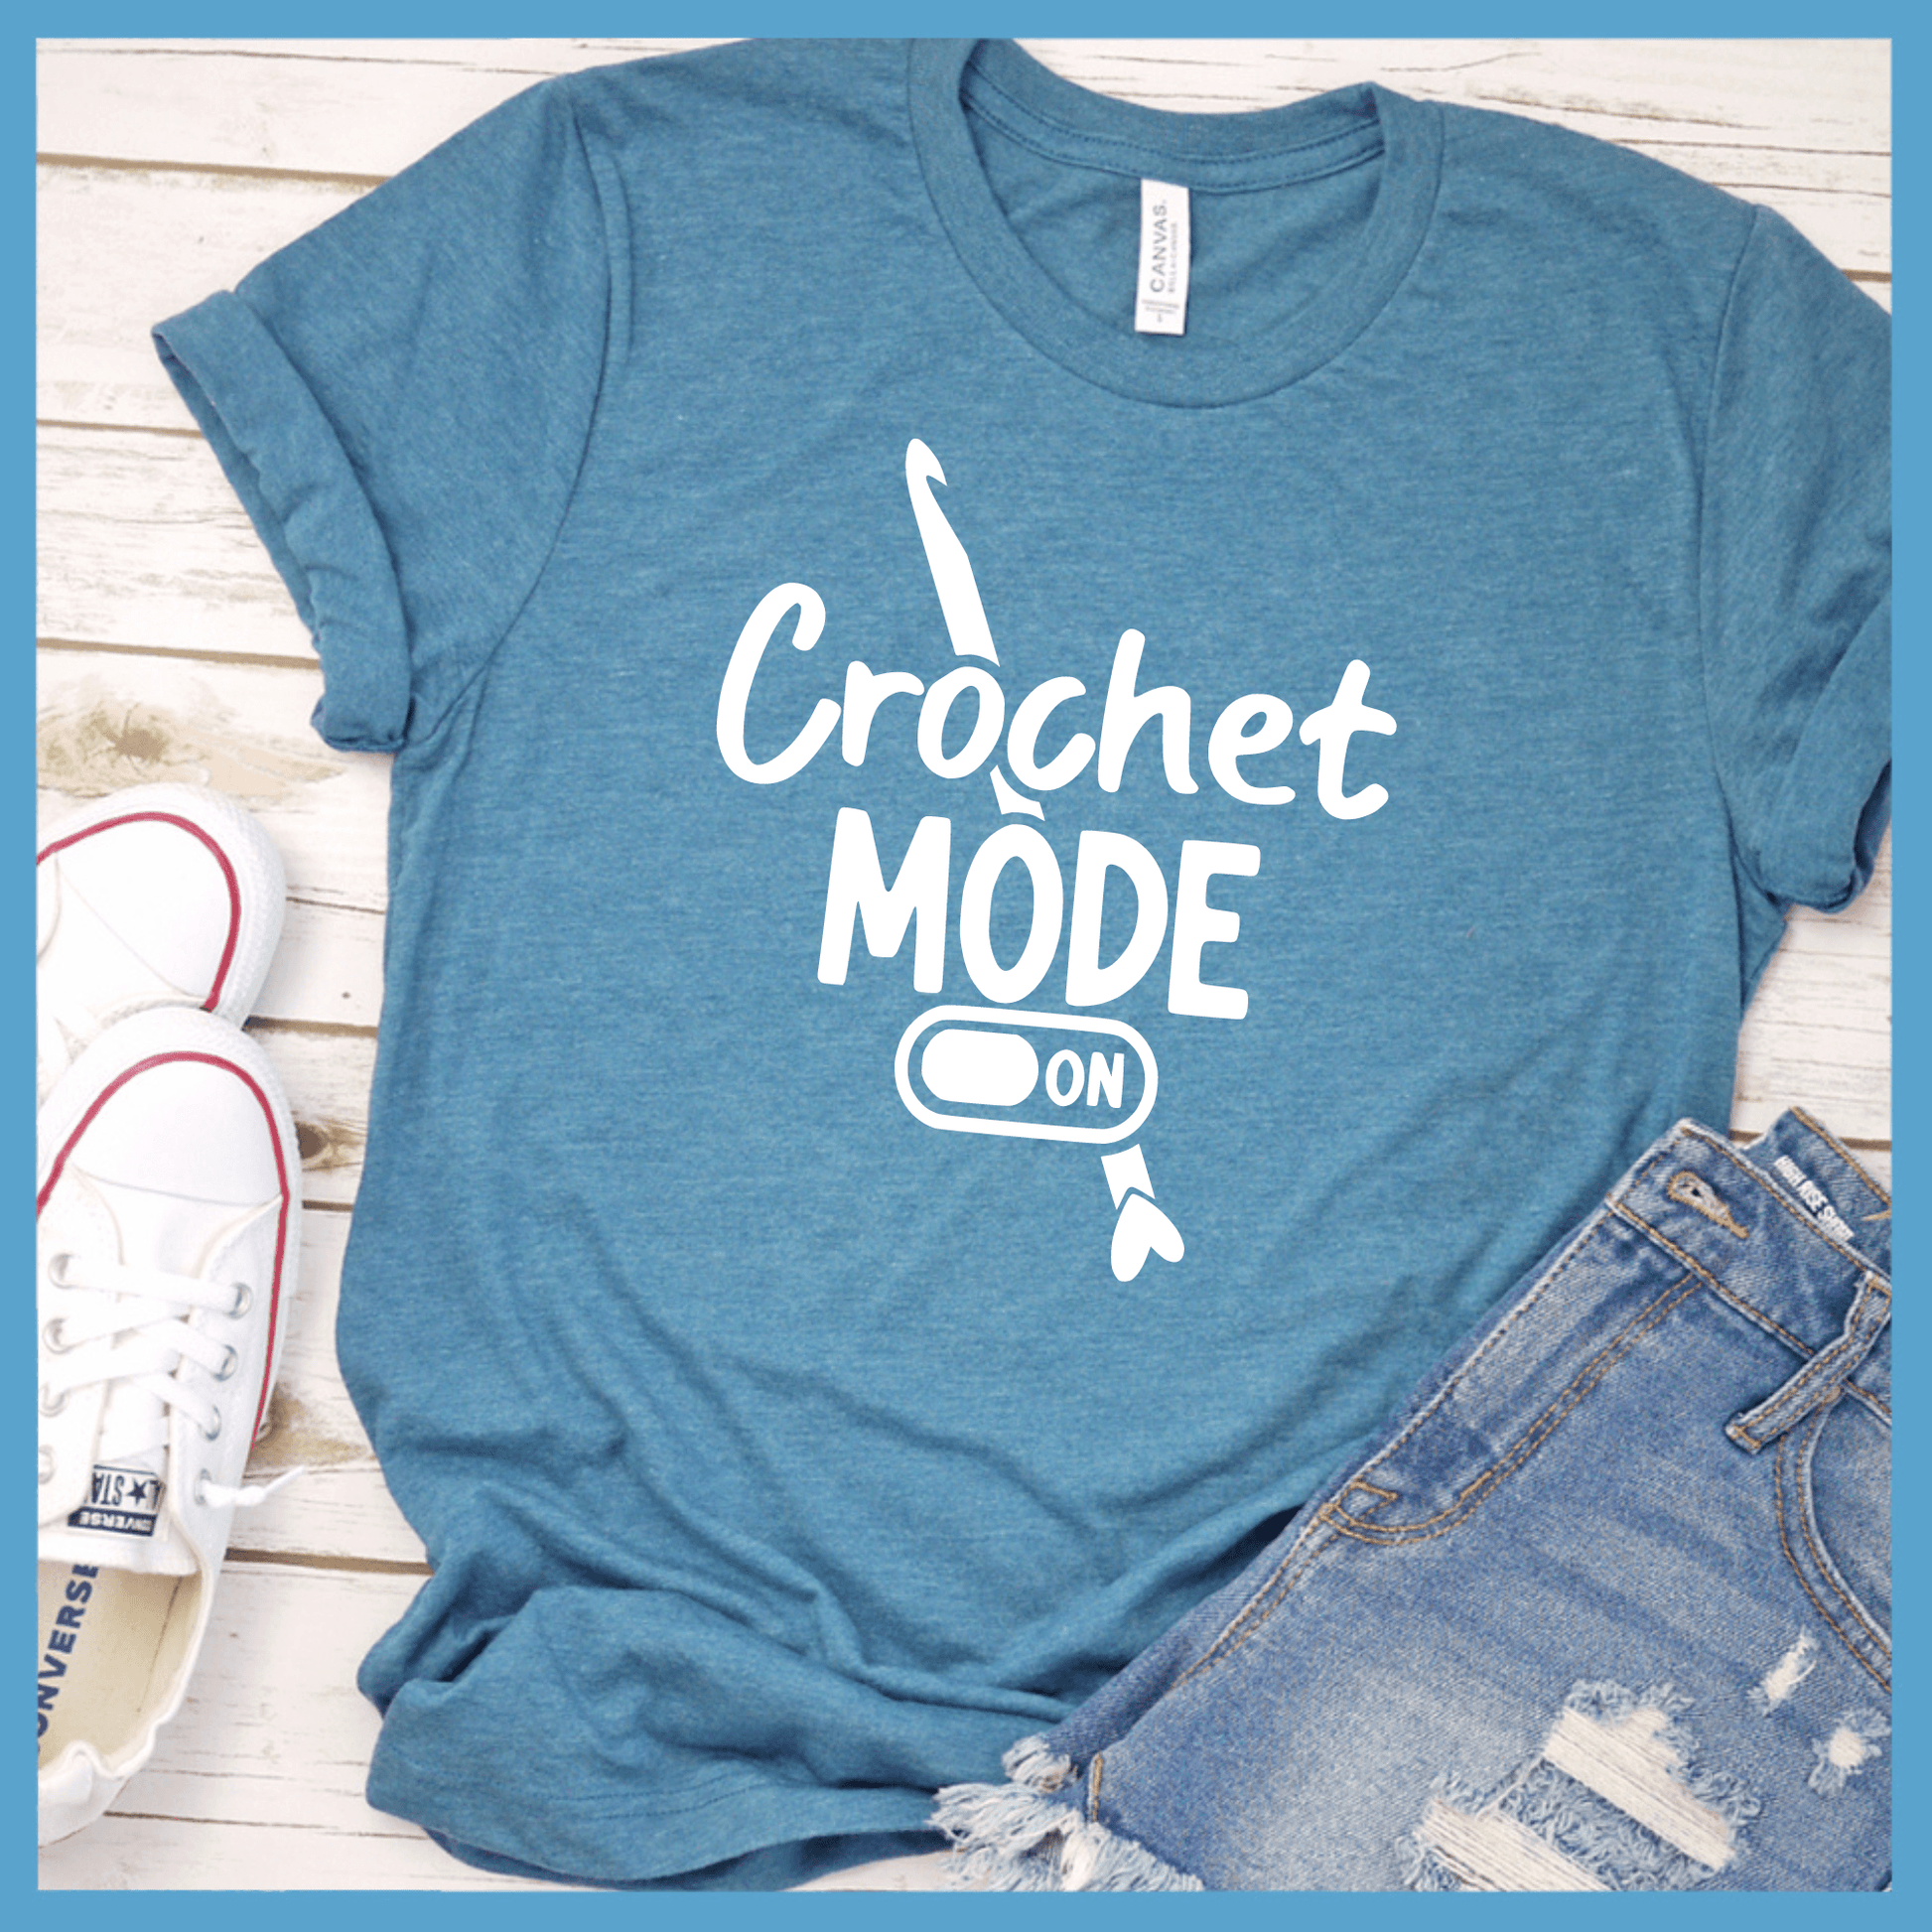 Crochet Mode ON T-Shirt Heather Deep Teal - Crochet Mode ON T-Shirt with playful lettering for crafting enthusiasts.